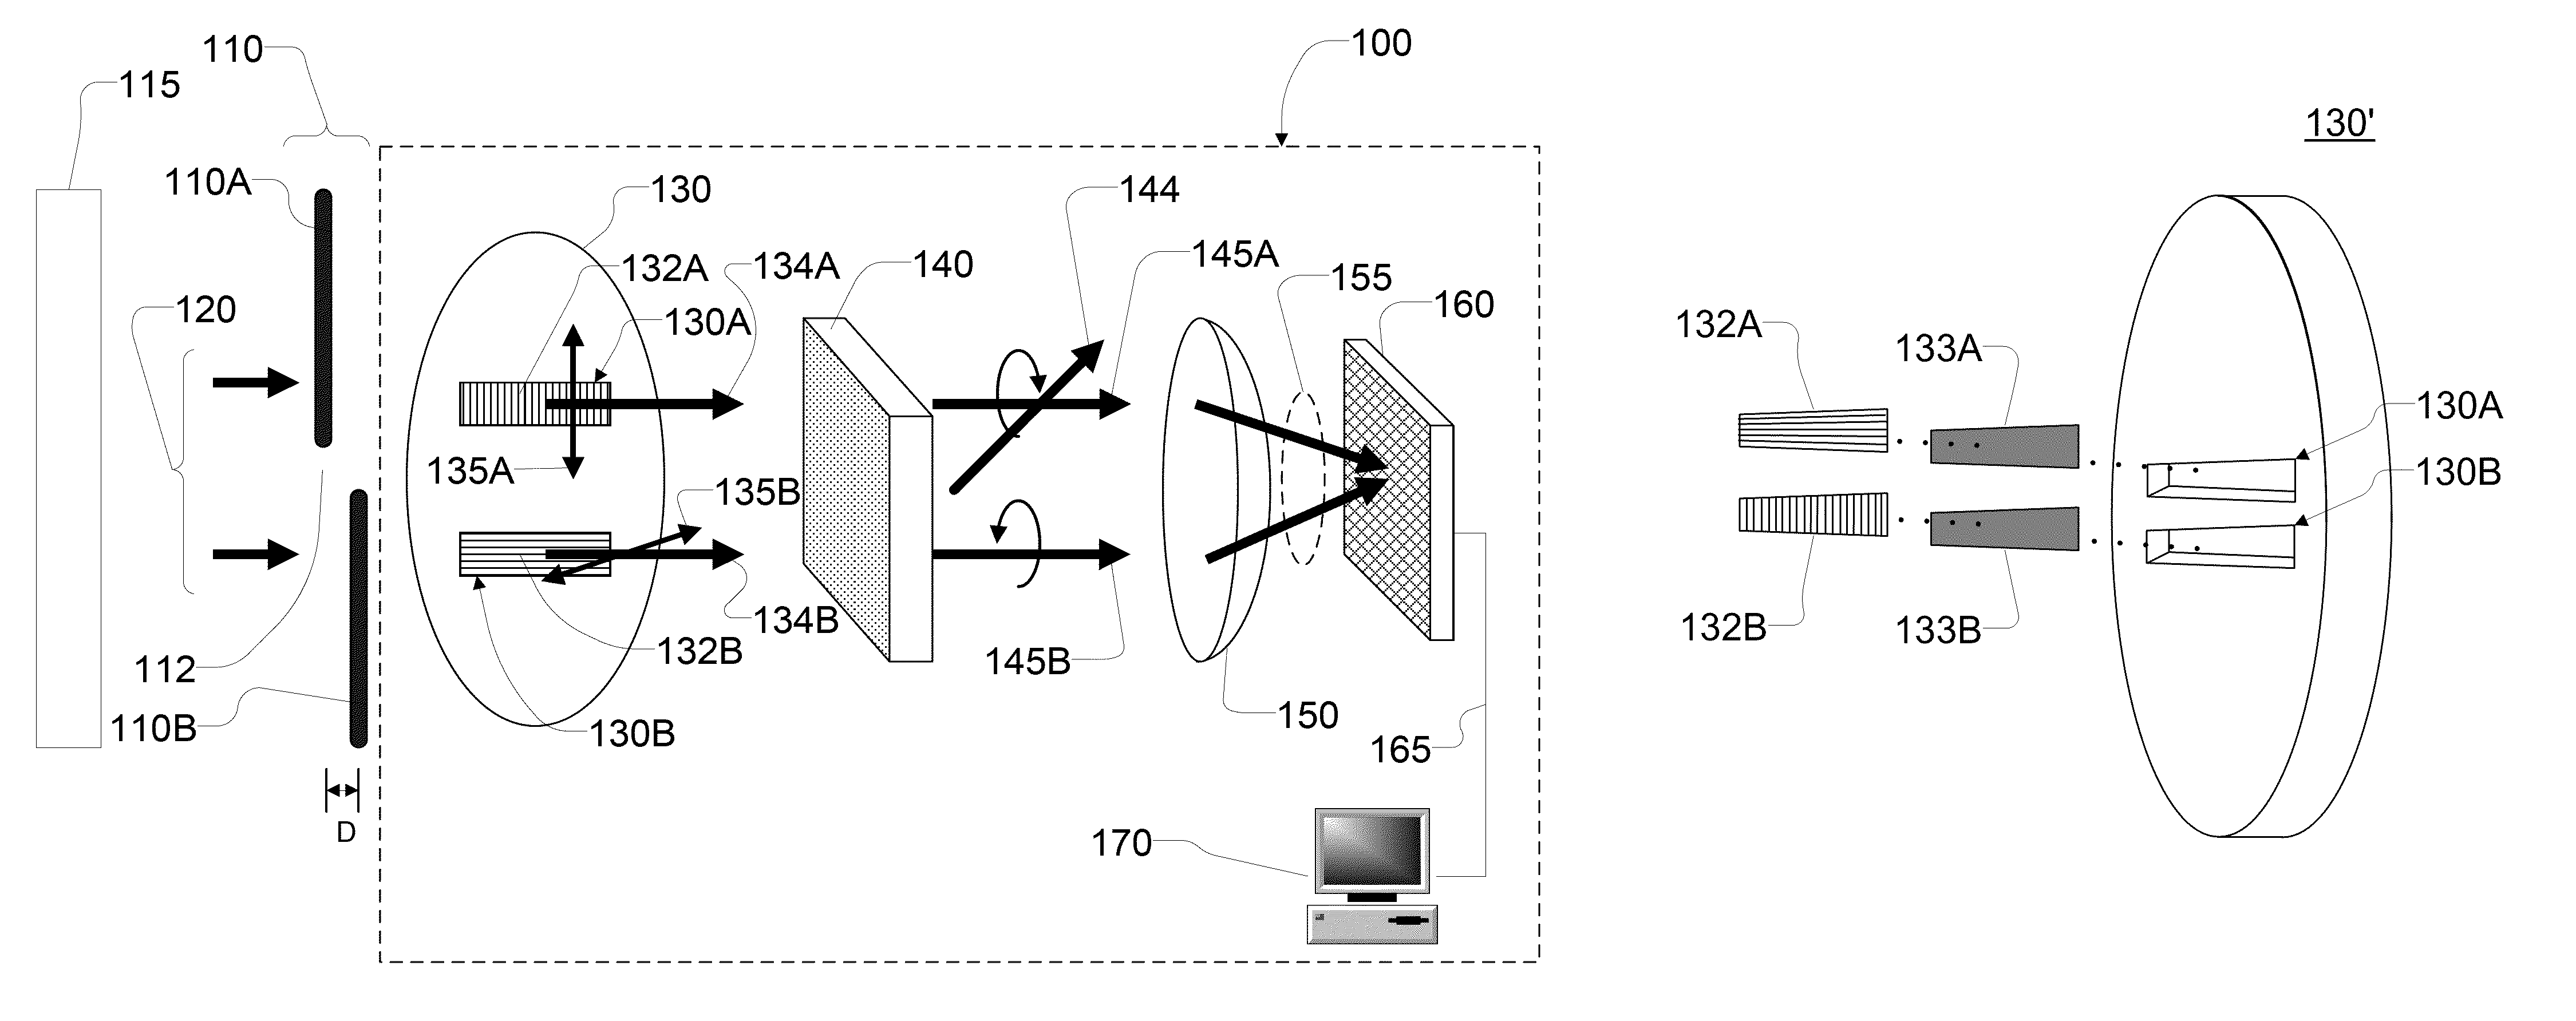 Polarization modulated image conjugate piston sensing and phase retrieval system